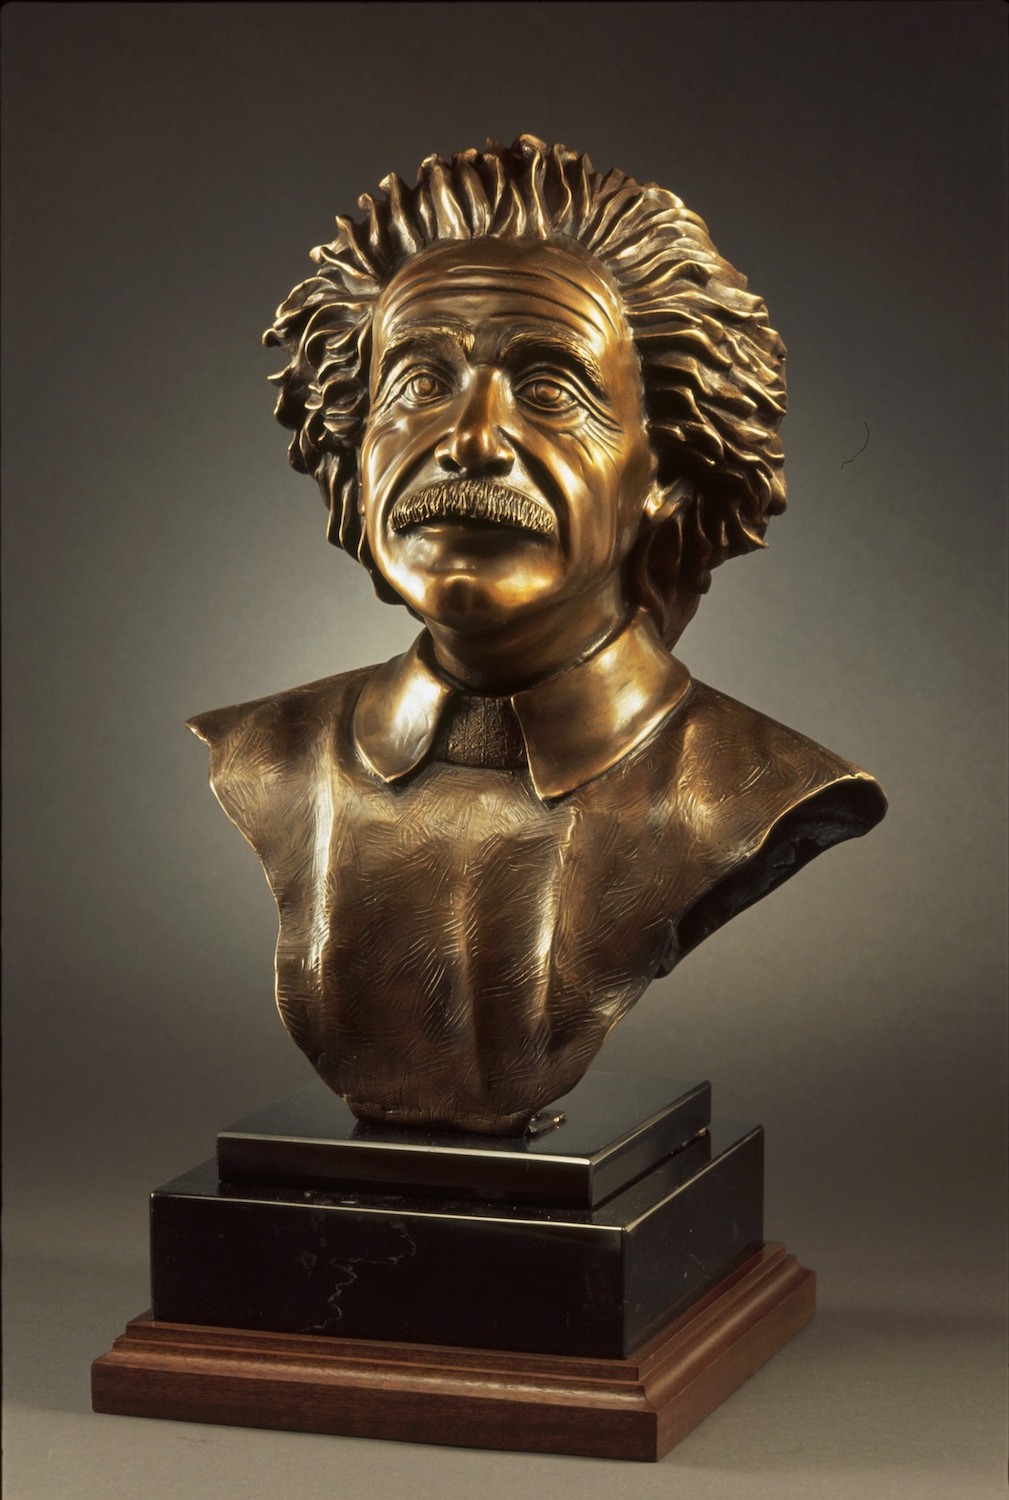 Wedge Mew Mew høg Albert Einstein Bronze Bust Bronze Sculpture By Felix Velez |  absolutearts.com